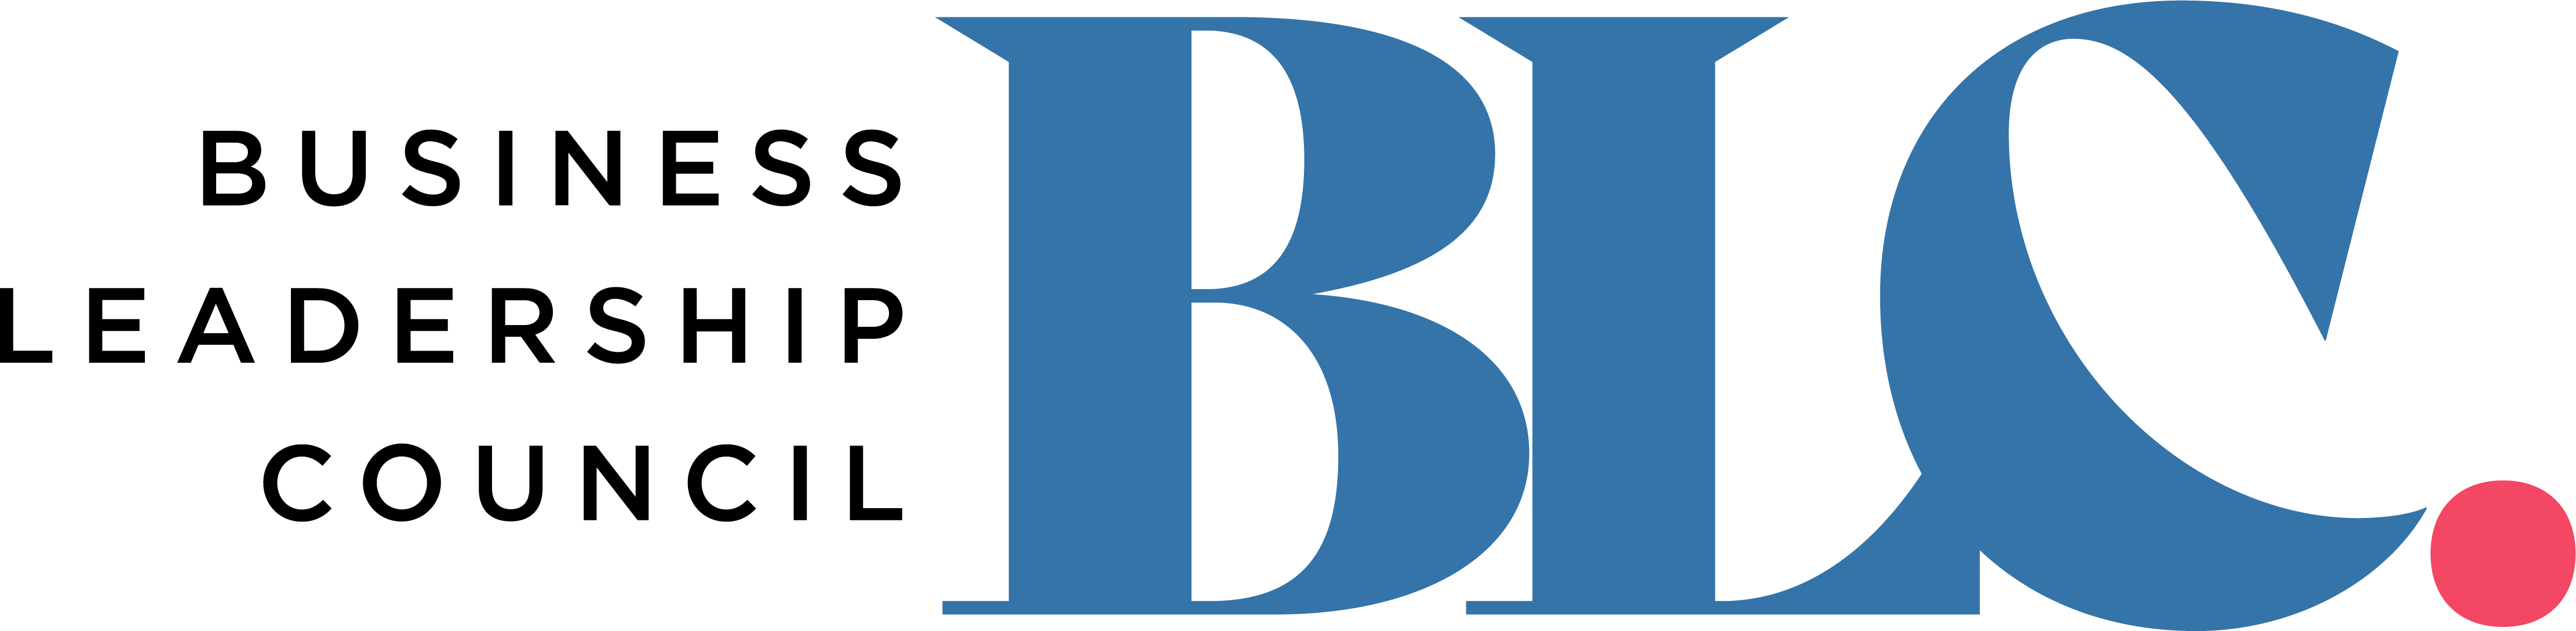 Business Leadership Council Logo